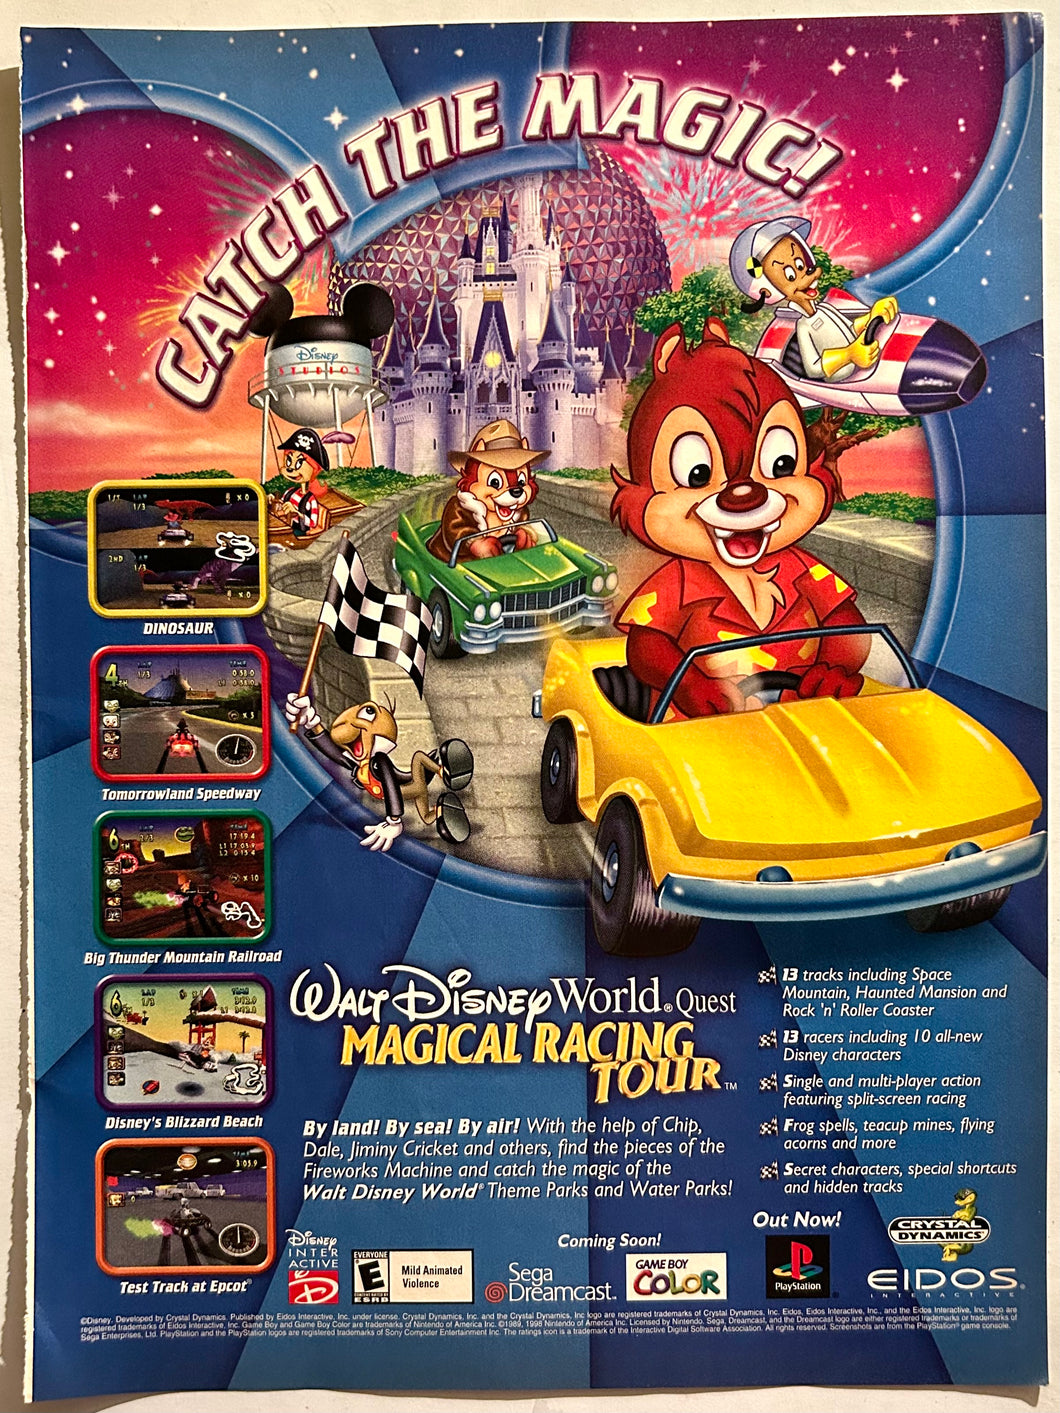 Walt Disney World Quest: Magical Racing Tour - PlayStation DC GBC - Original Vintage Advertisement - Print Ads - Laminated A4 Poster